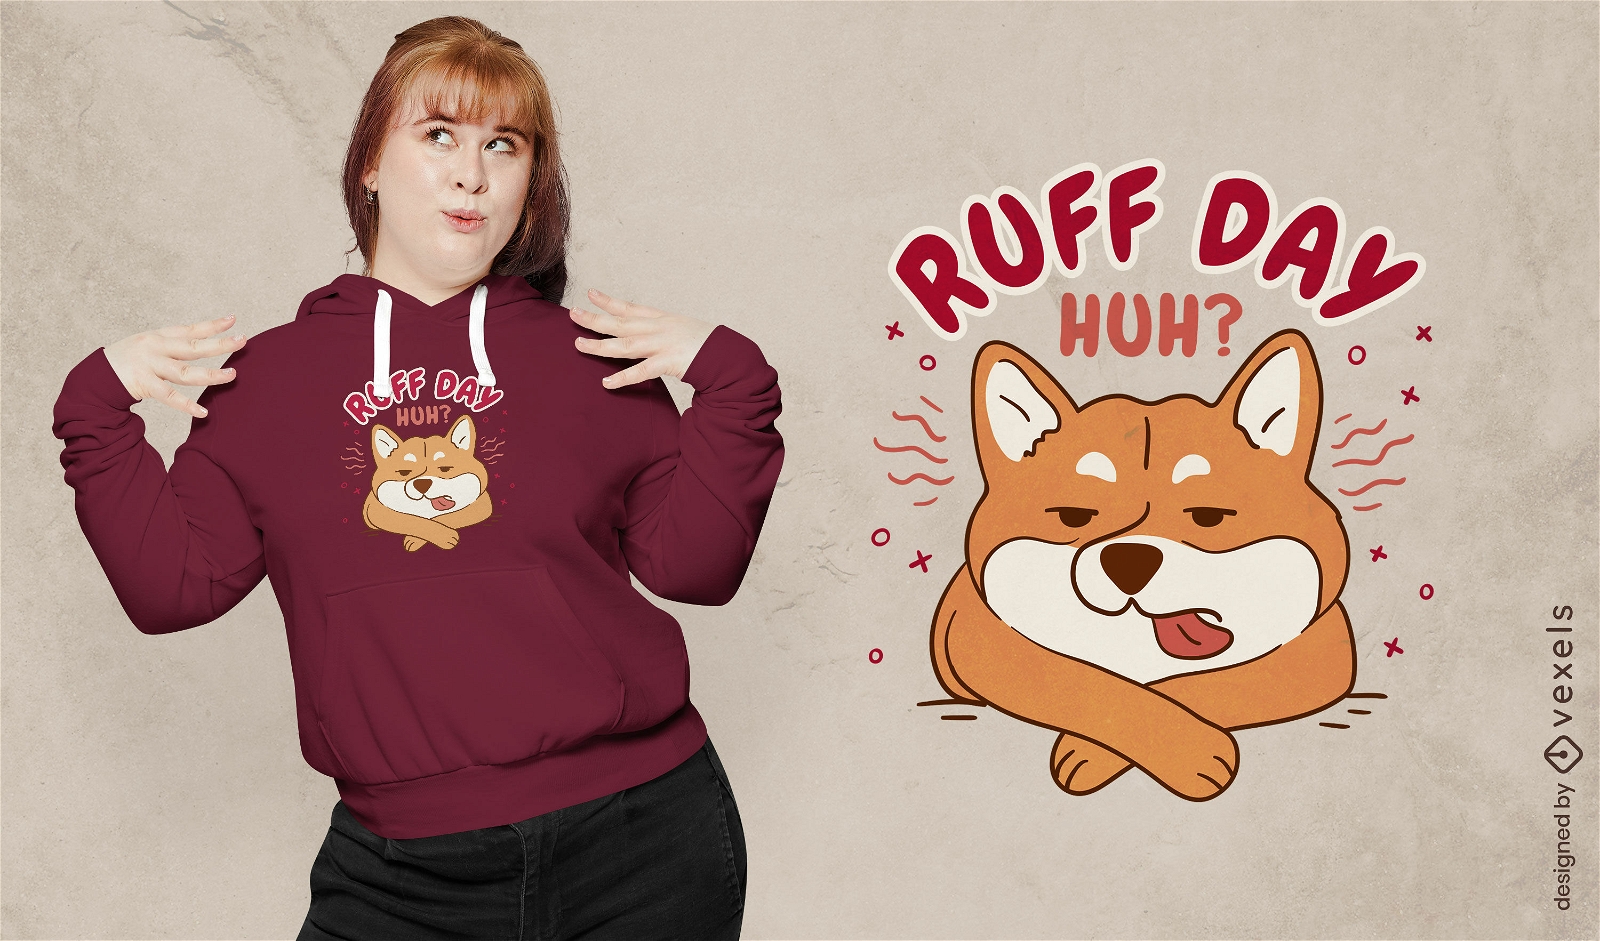 Ruff day funny dog t-shirt design